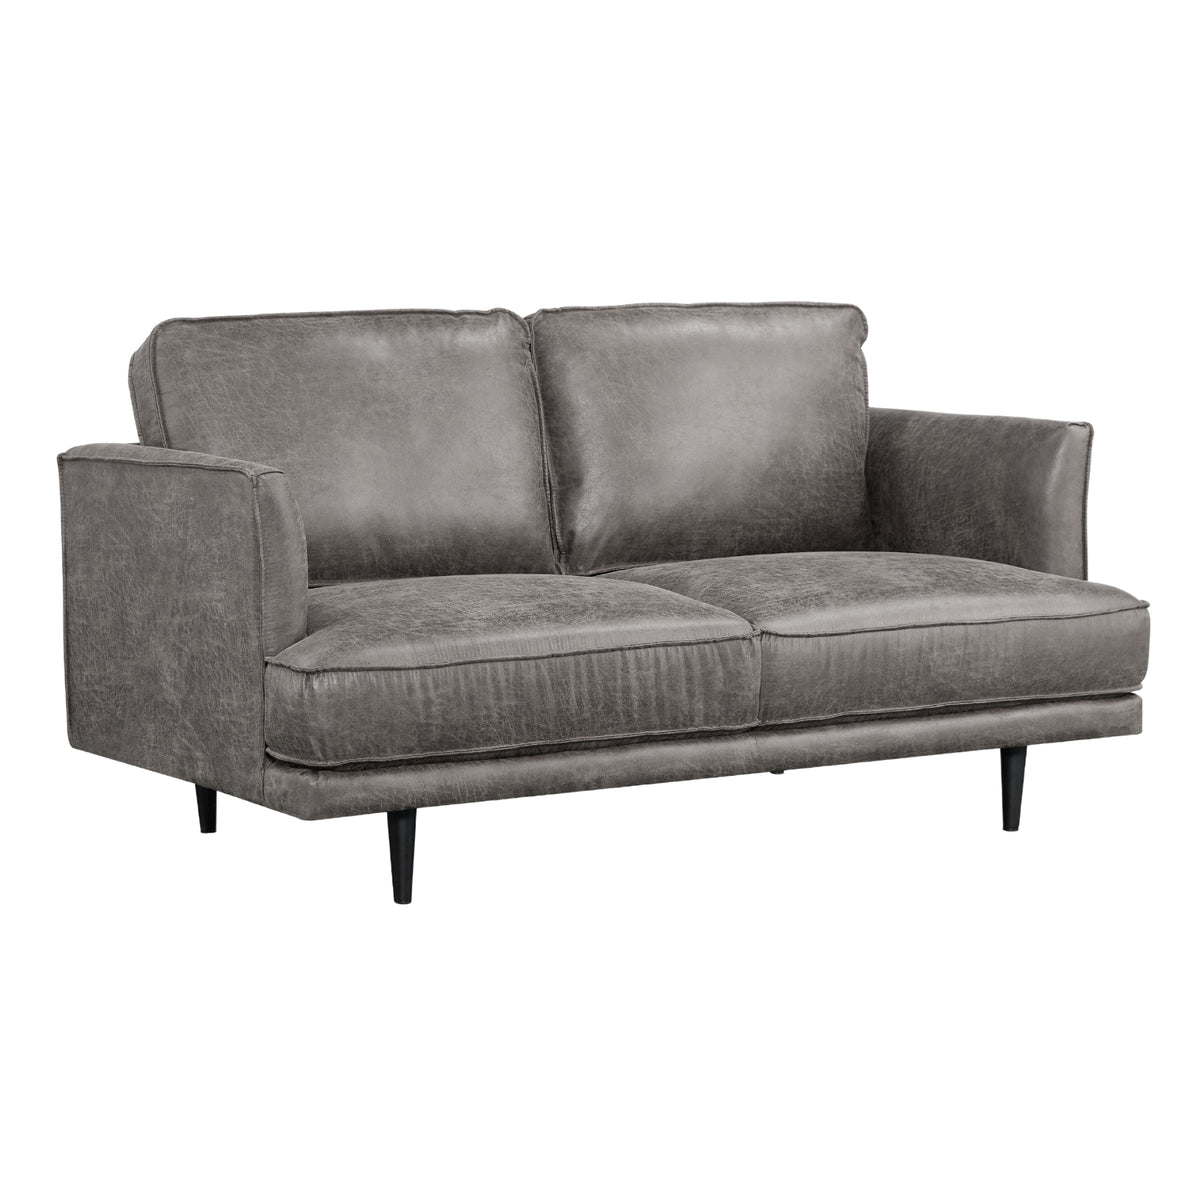 Rosie Fabric Sofa 2 Seater Grey